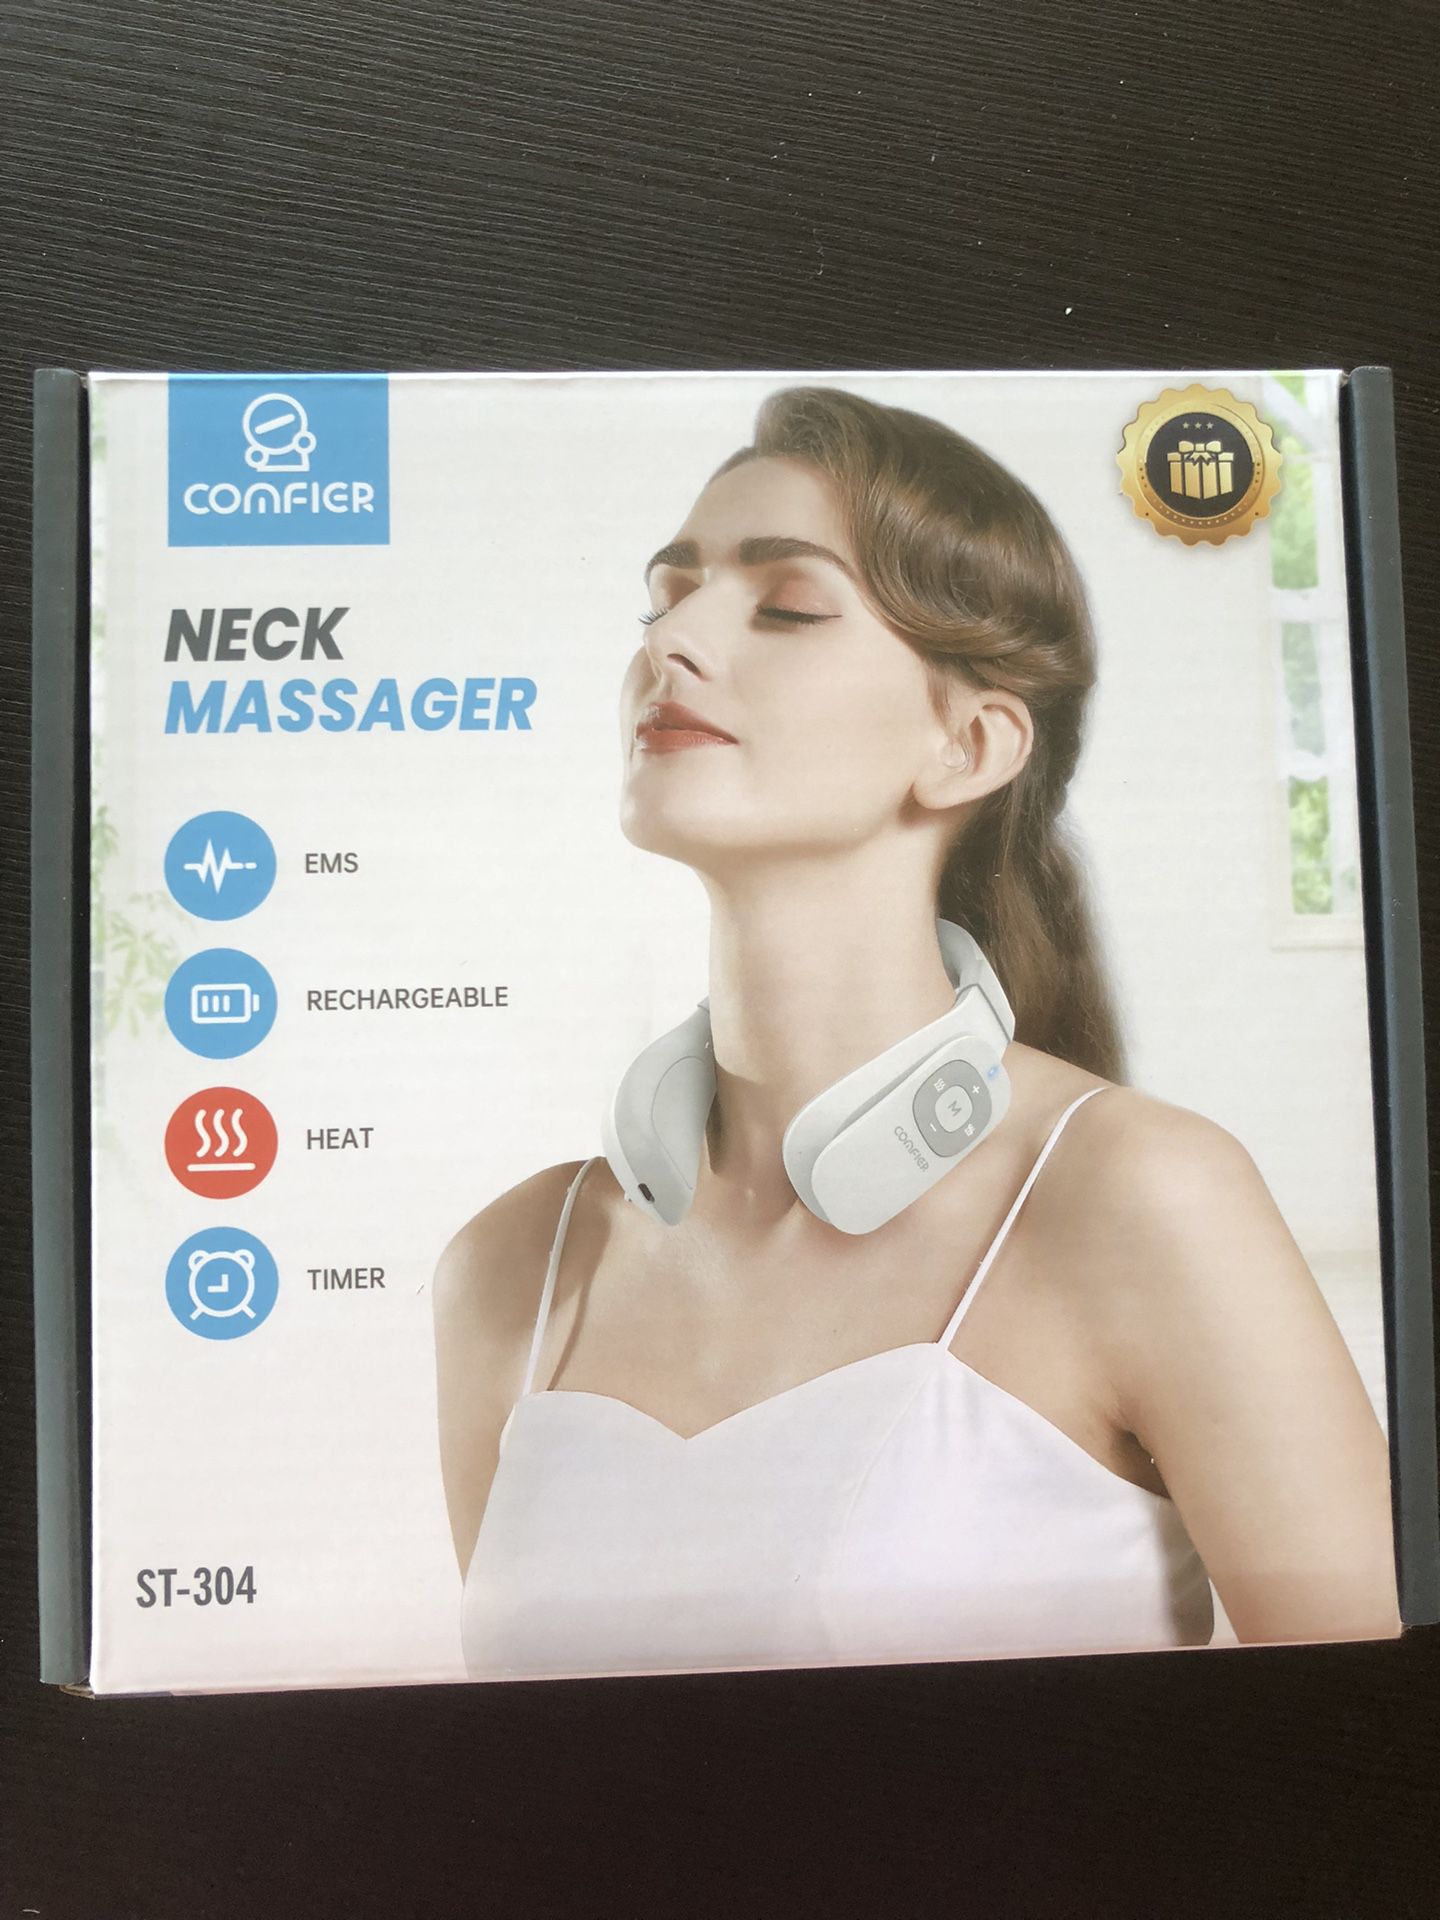 neck massager open box brand new